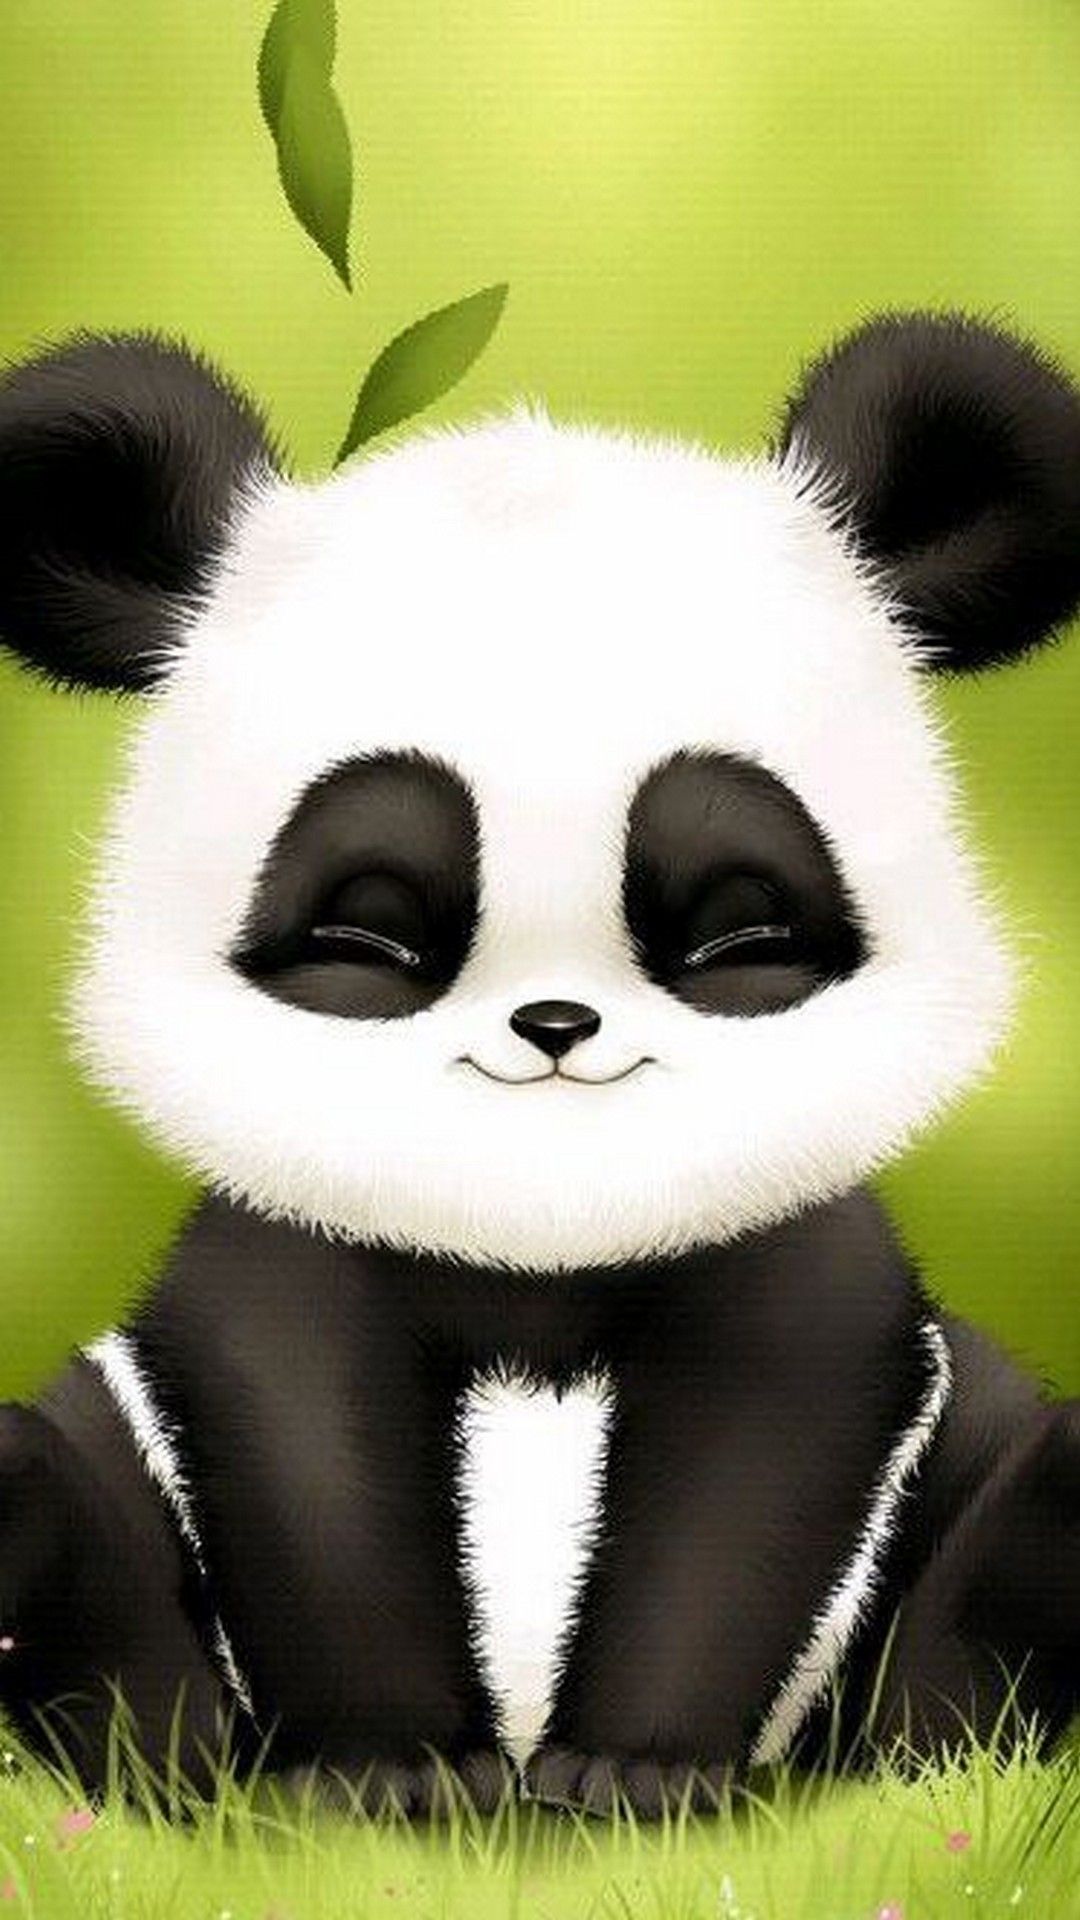 Kawaii panda, anime panda Stock Illustration